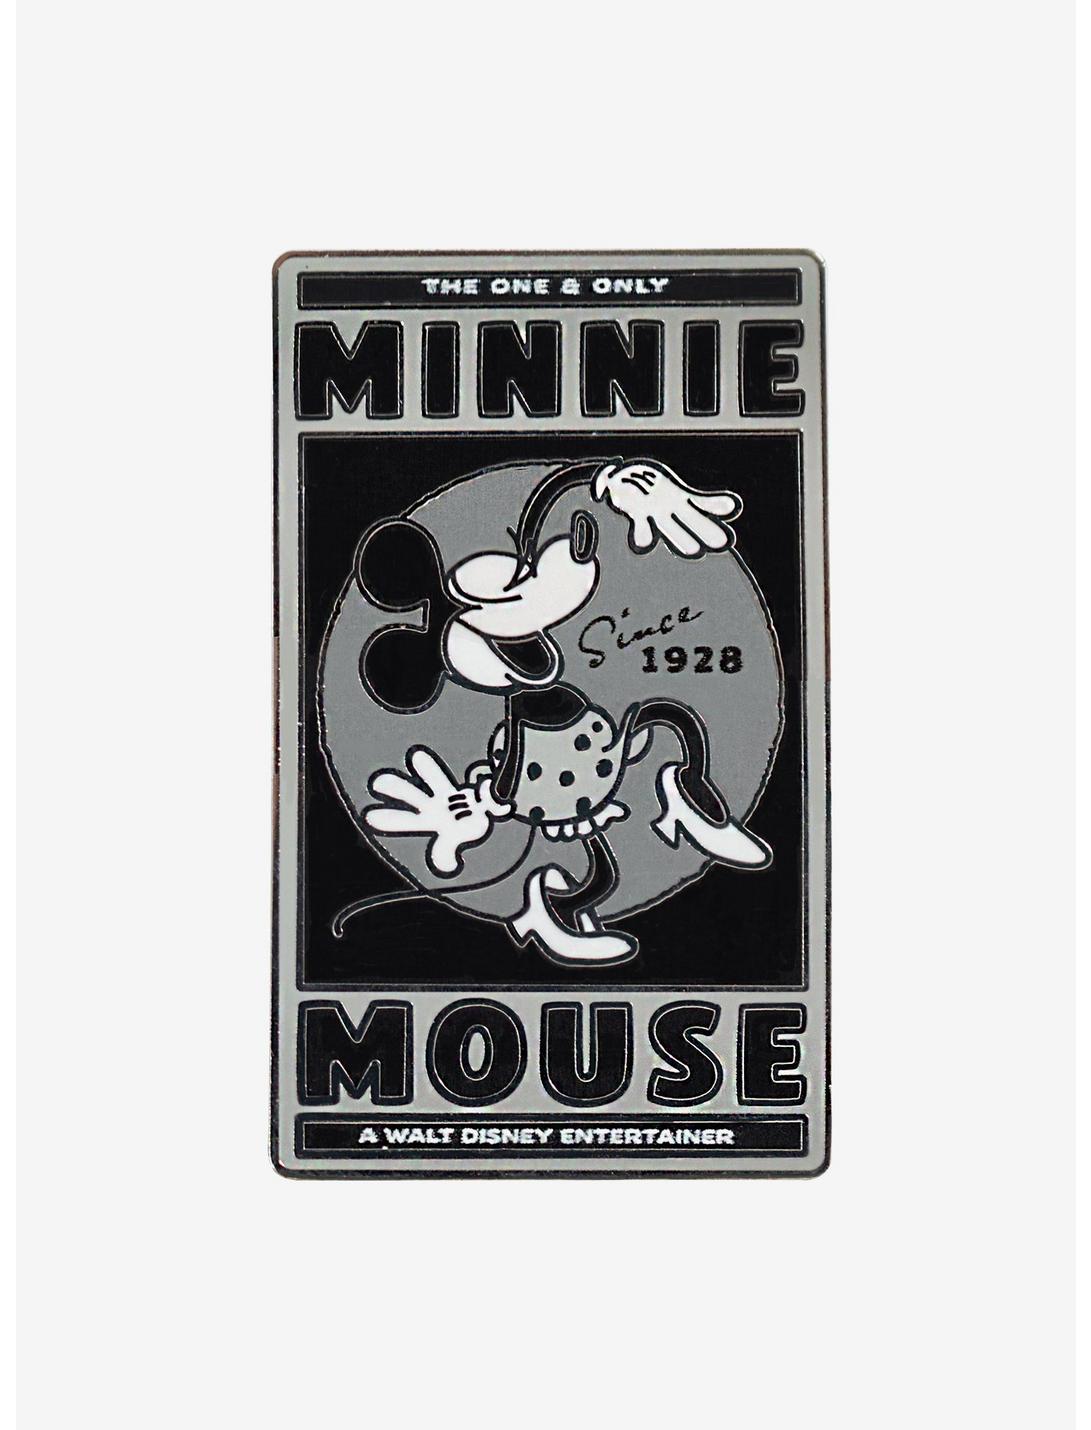 Disney 100 Minnie Mouse Tonal Portrait Enamel Pin - BoxLunch Exclusive, , hi-res